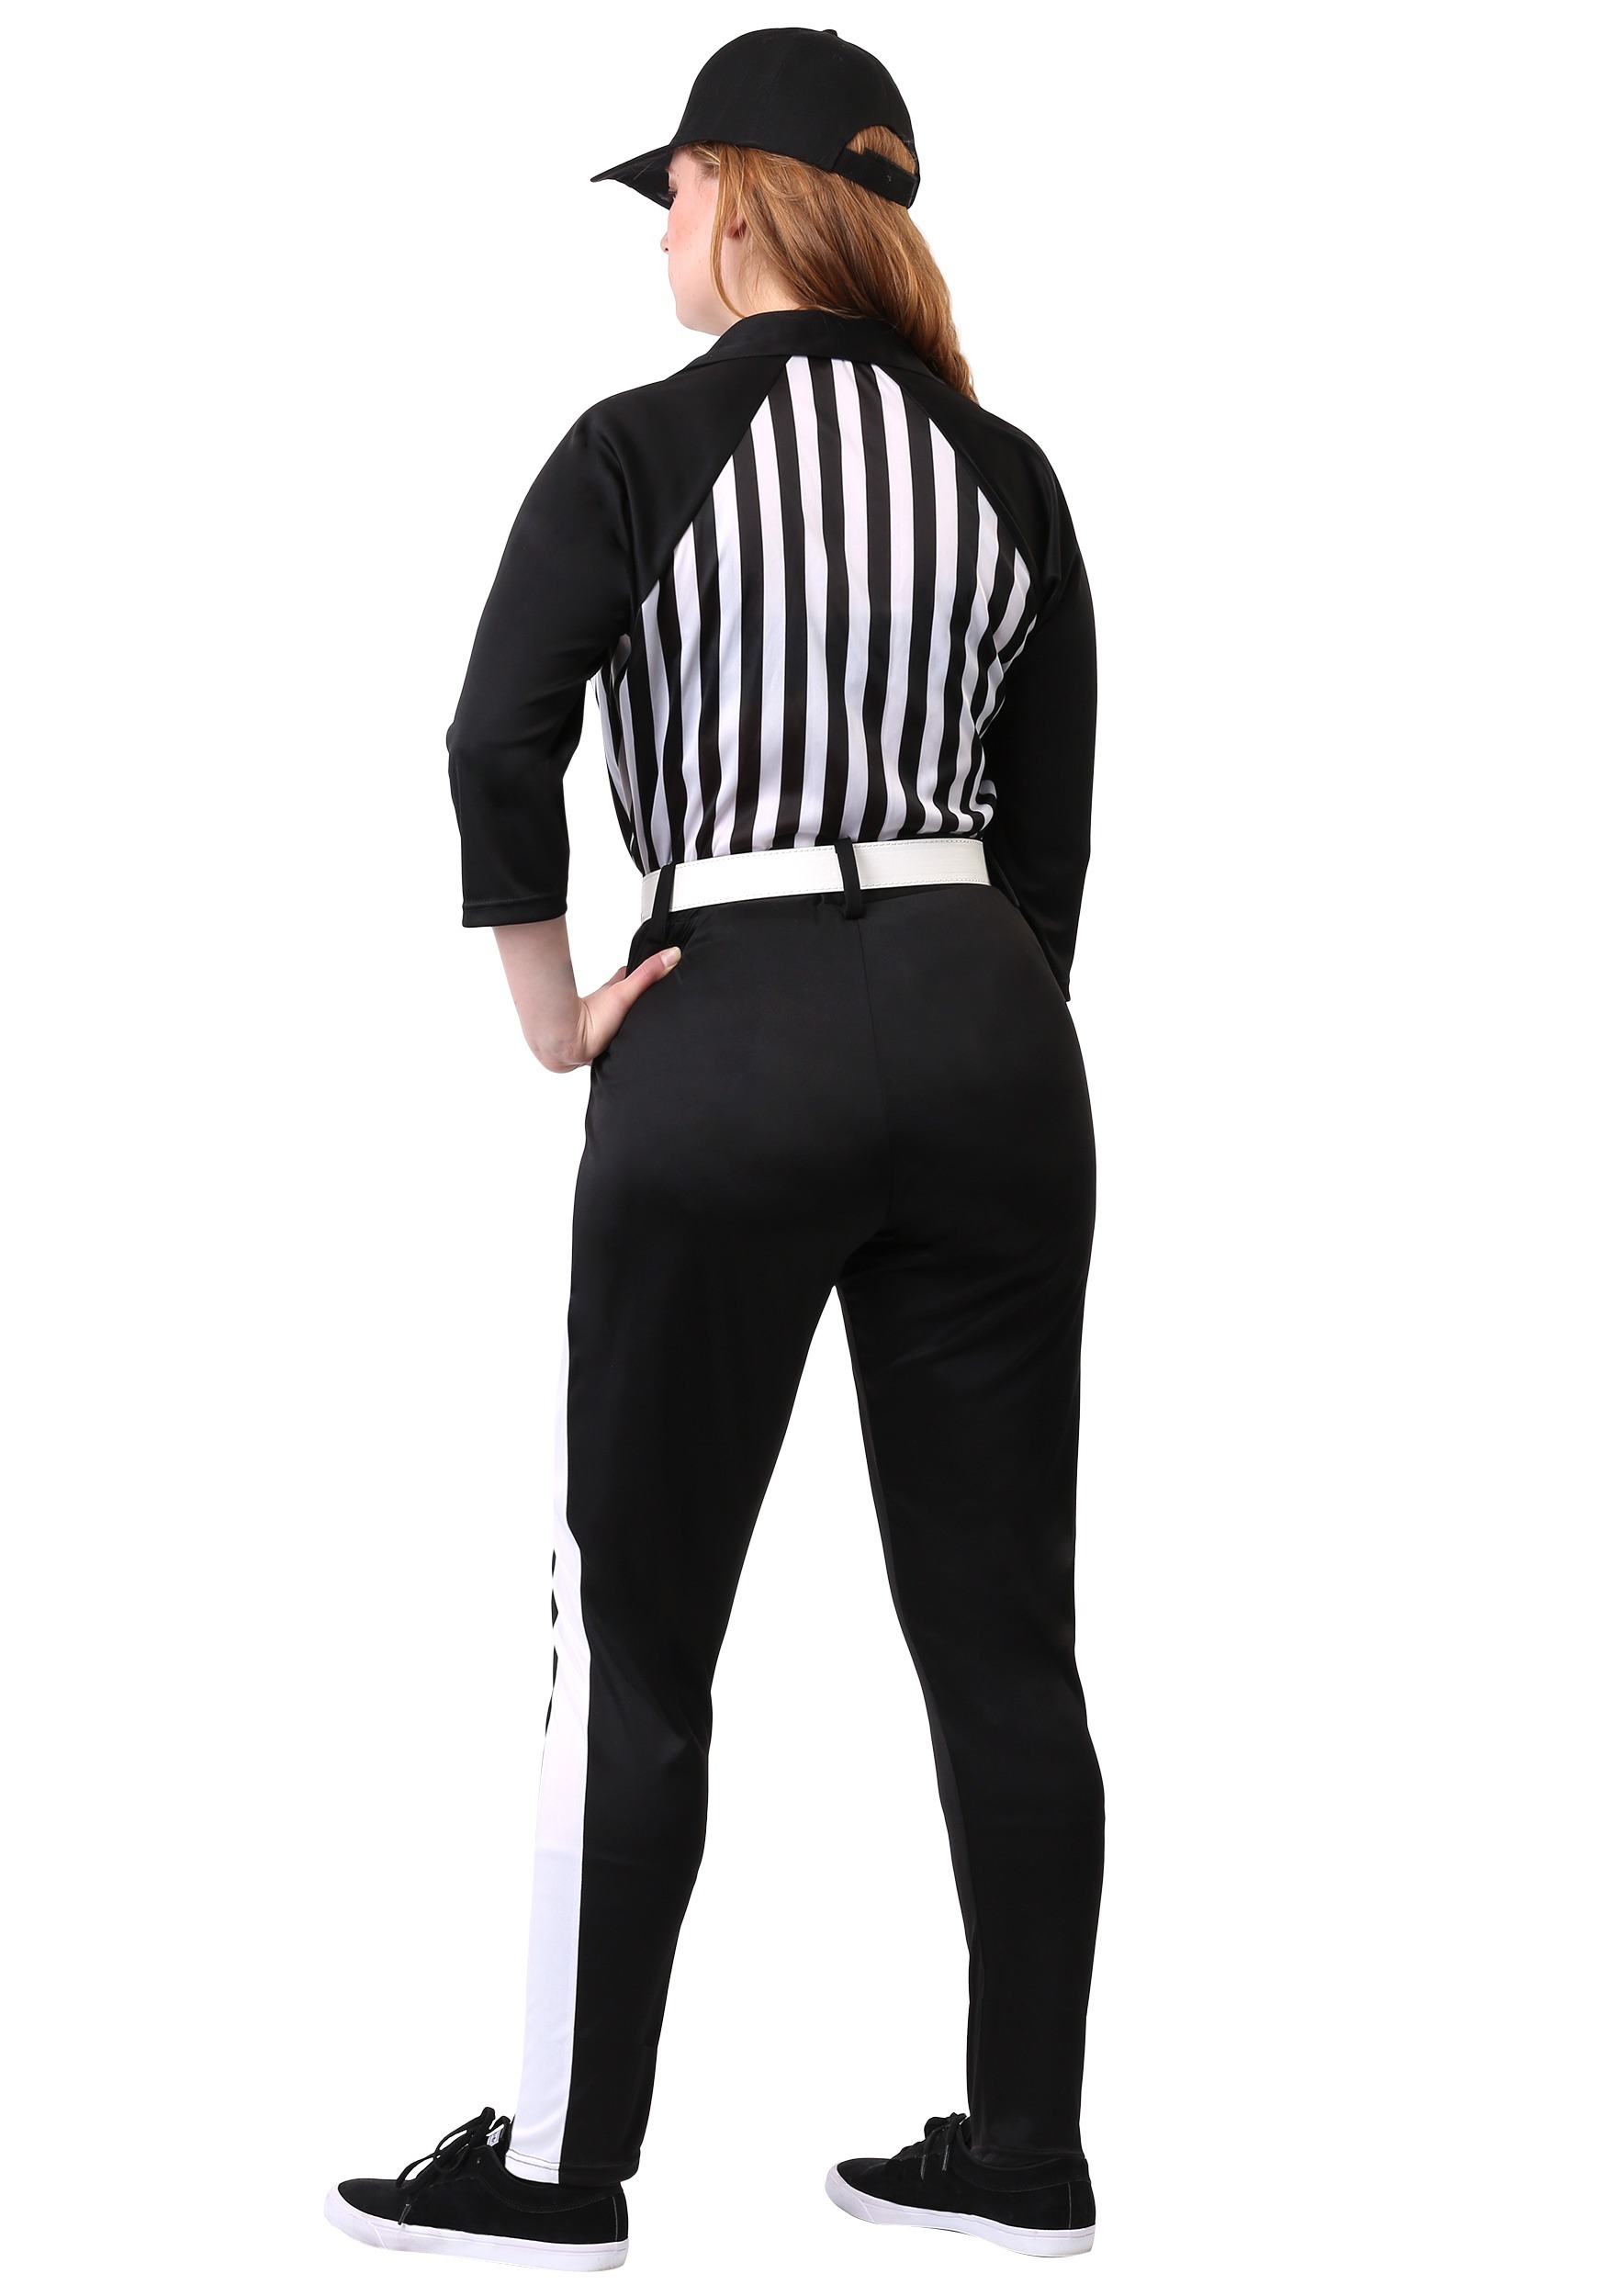 Plus Size Women's Referee Costume